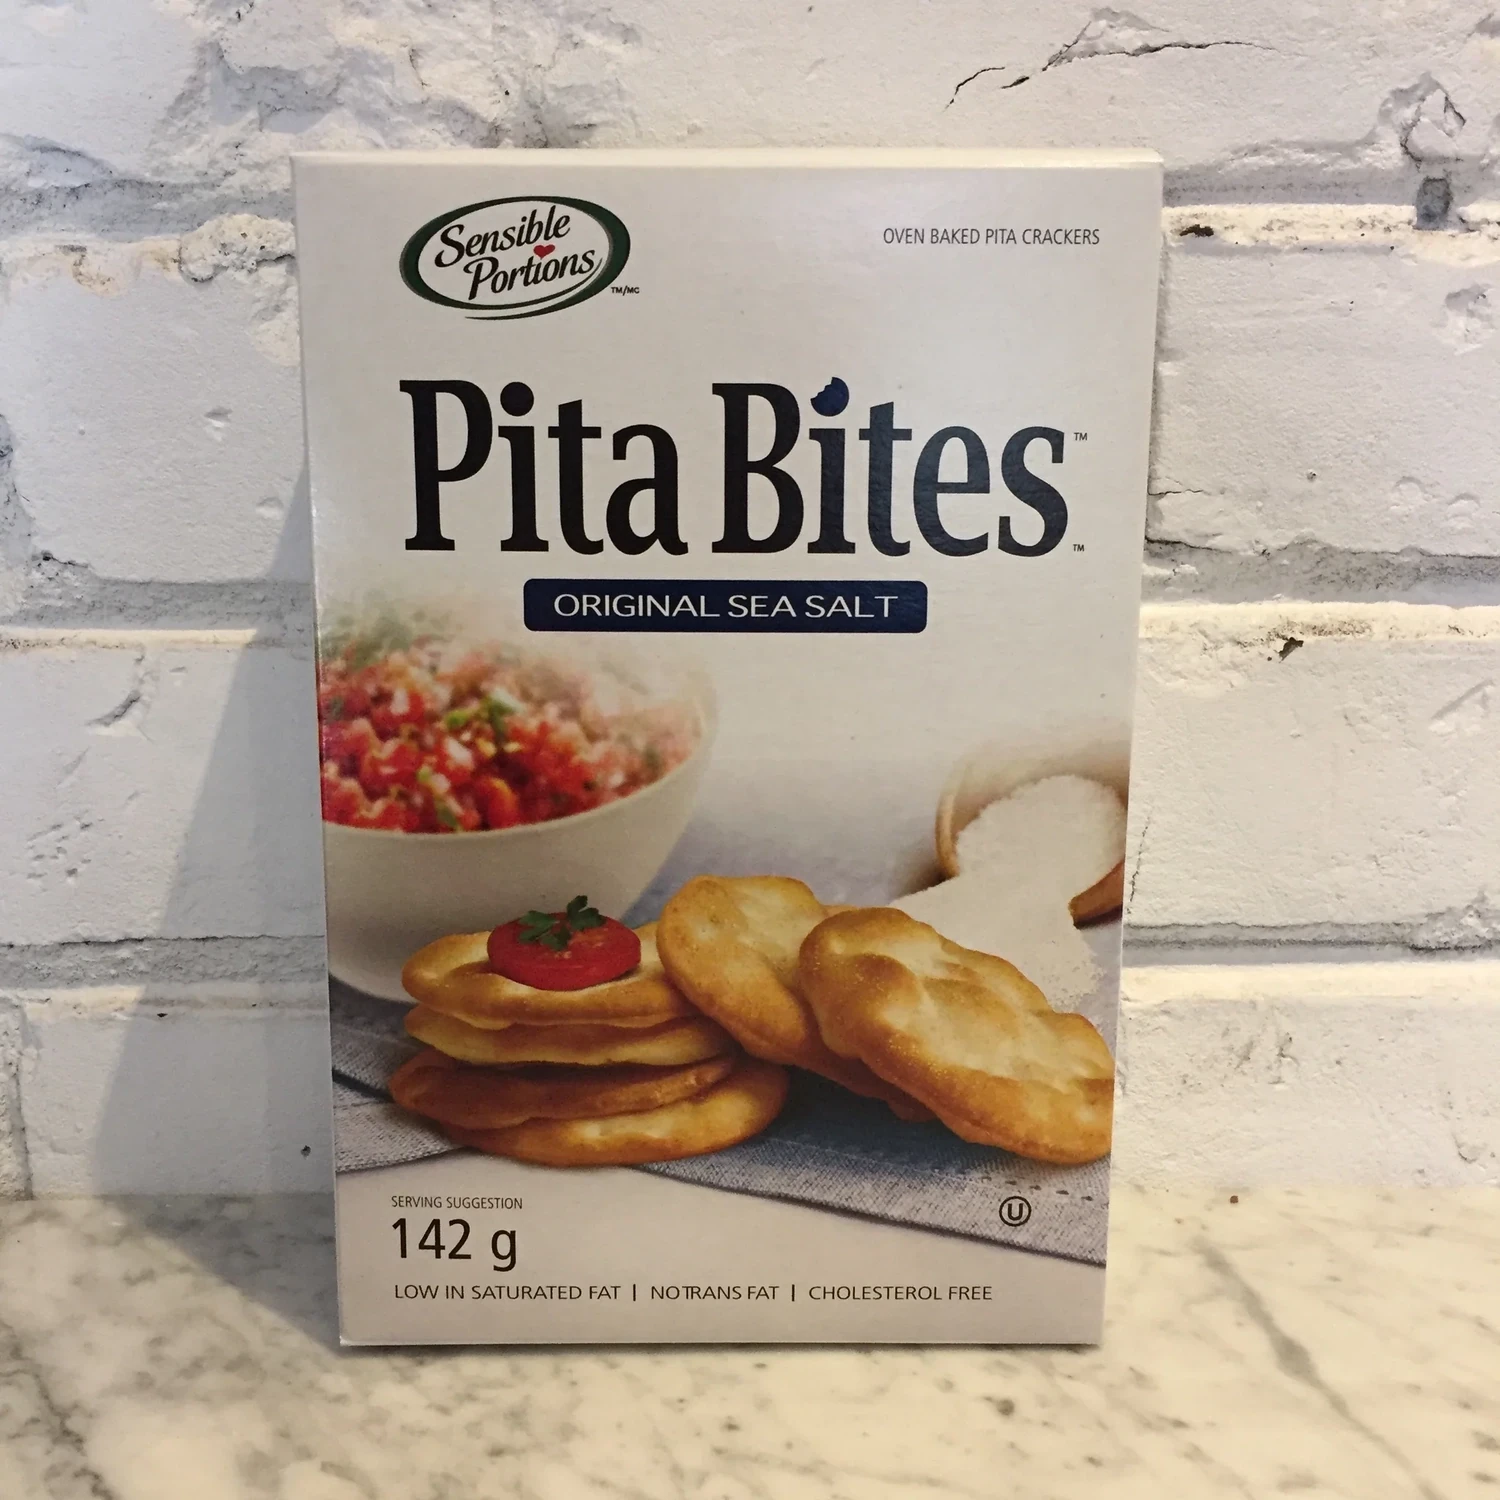 Sensible Portions - Pita Bites - Original Sea Salt 142g